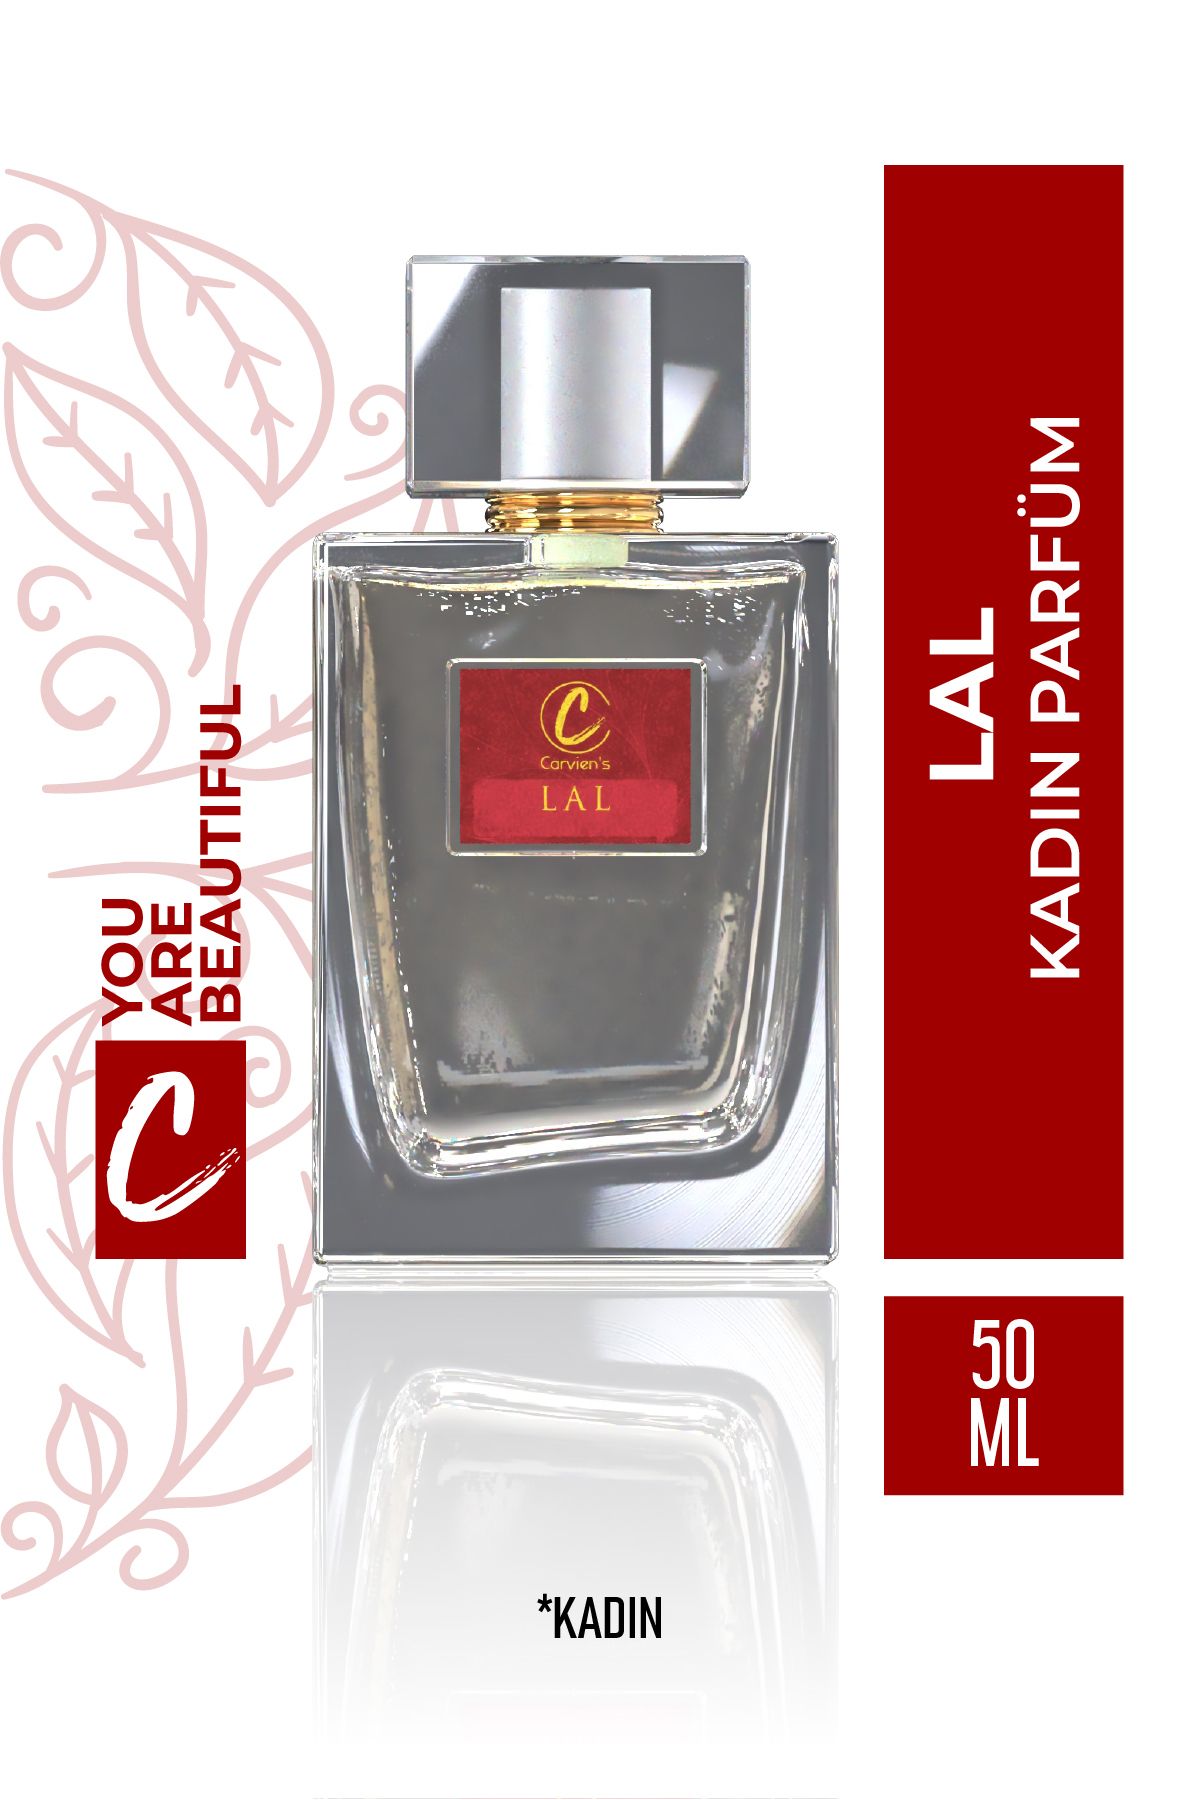 Carvien's Lal Edp 50 ml Kadın Parfüm 8683762316170